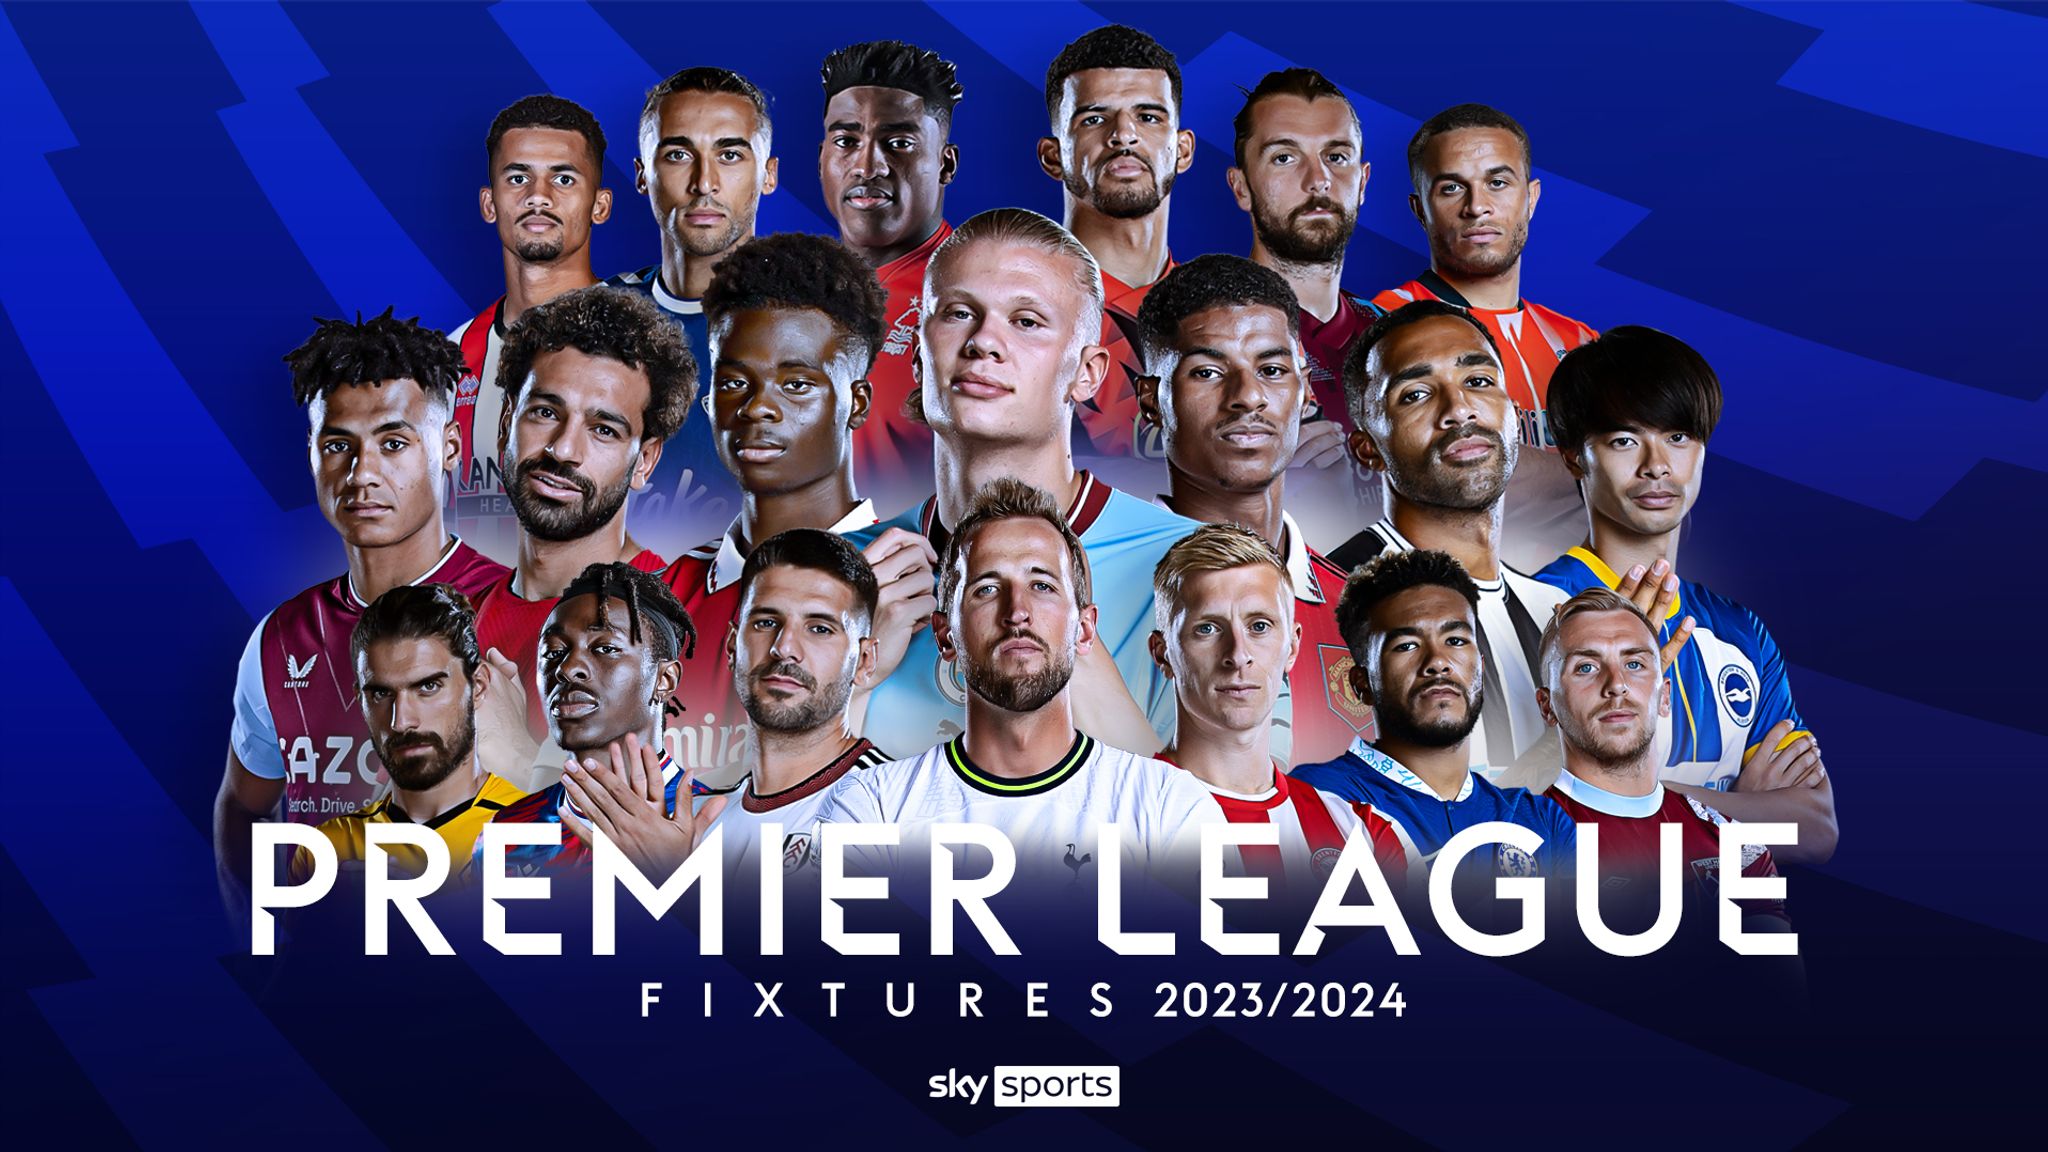 Premier League 2024 Teams: Full List and Analysis